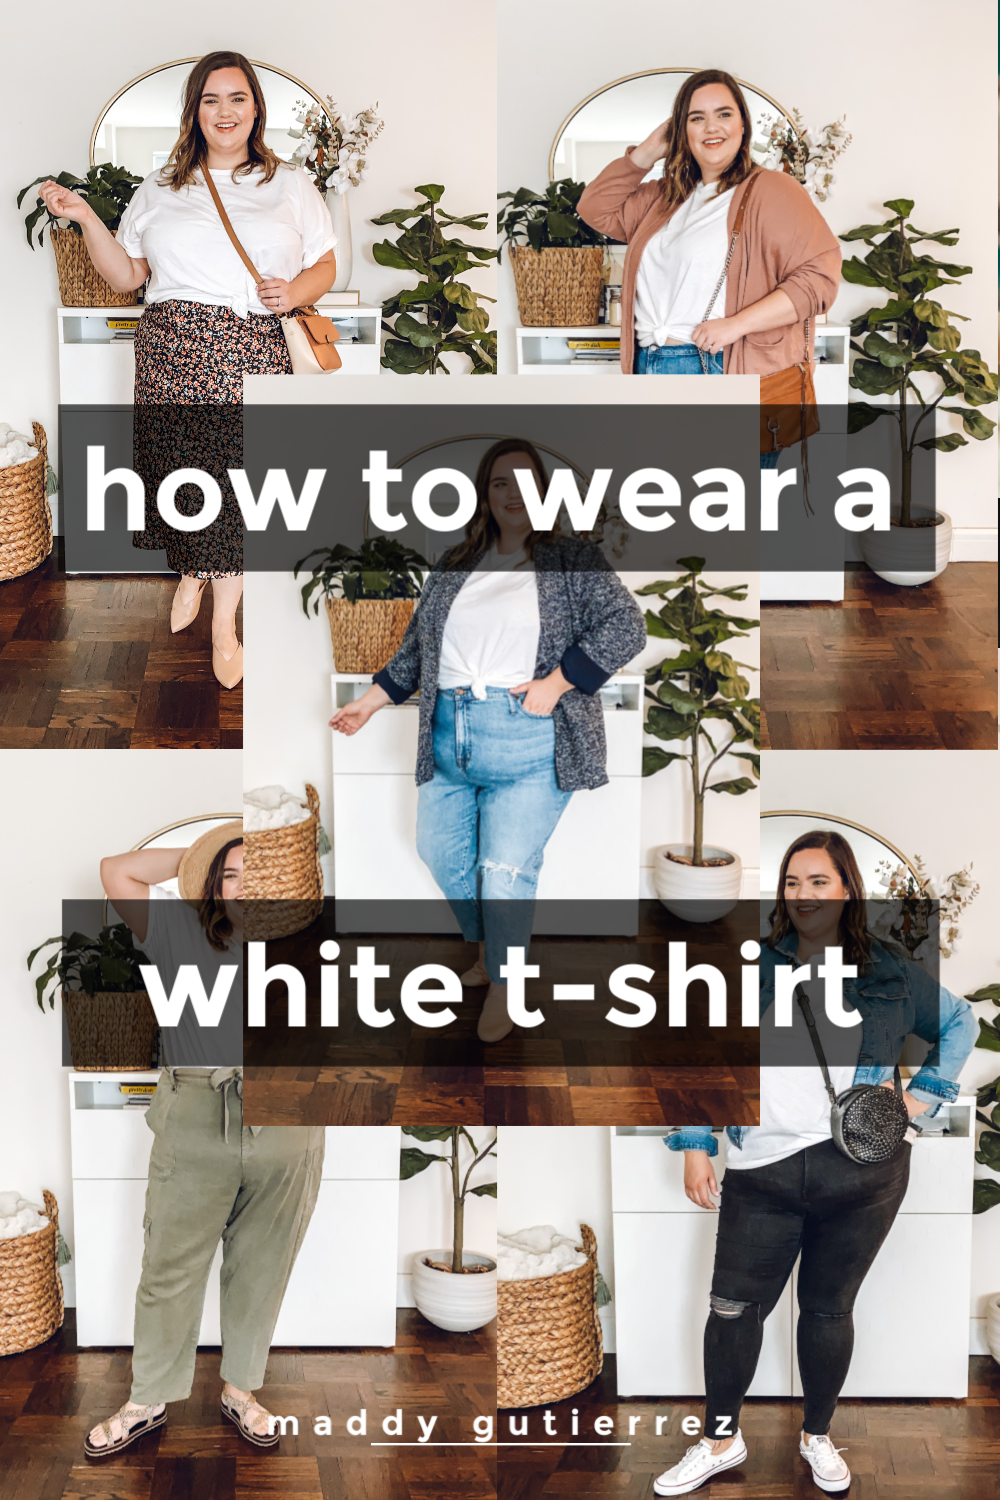 FIVE WAYS TO WEAR A WHITE T-SHIRT